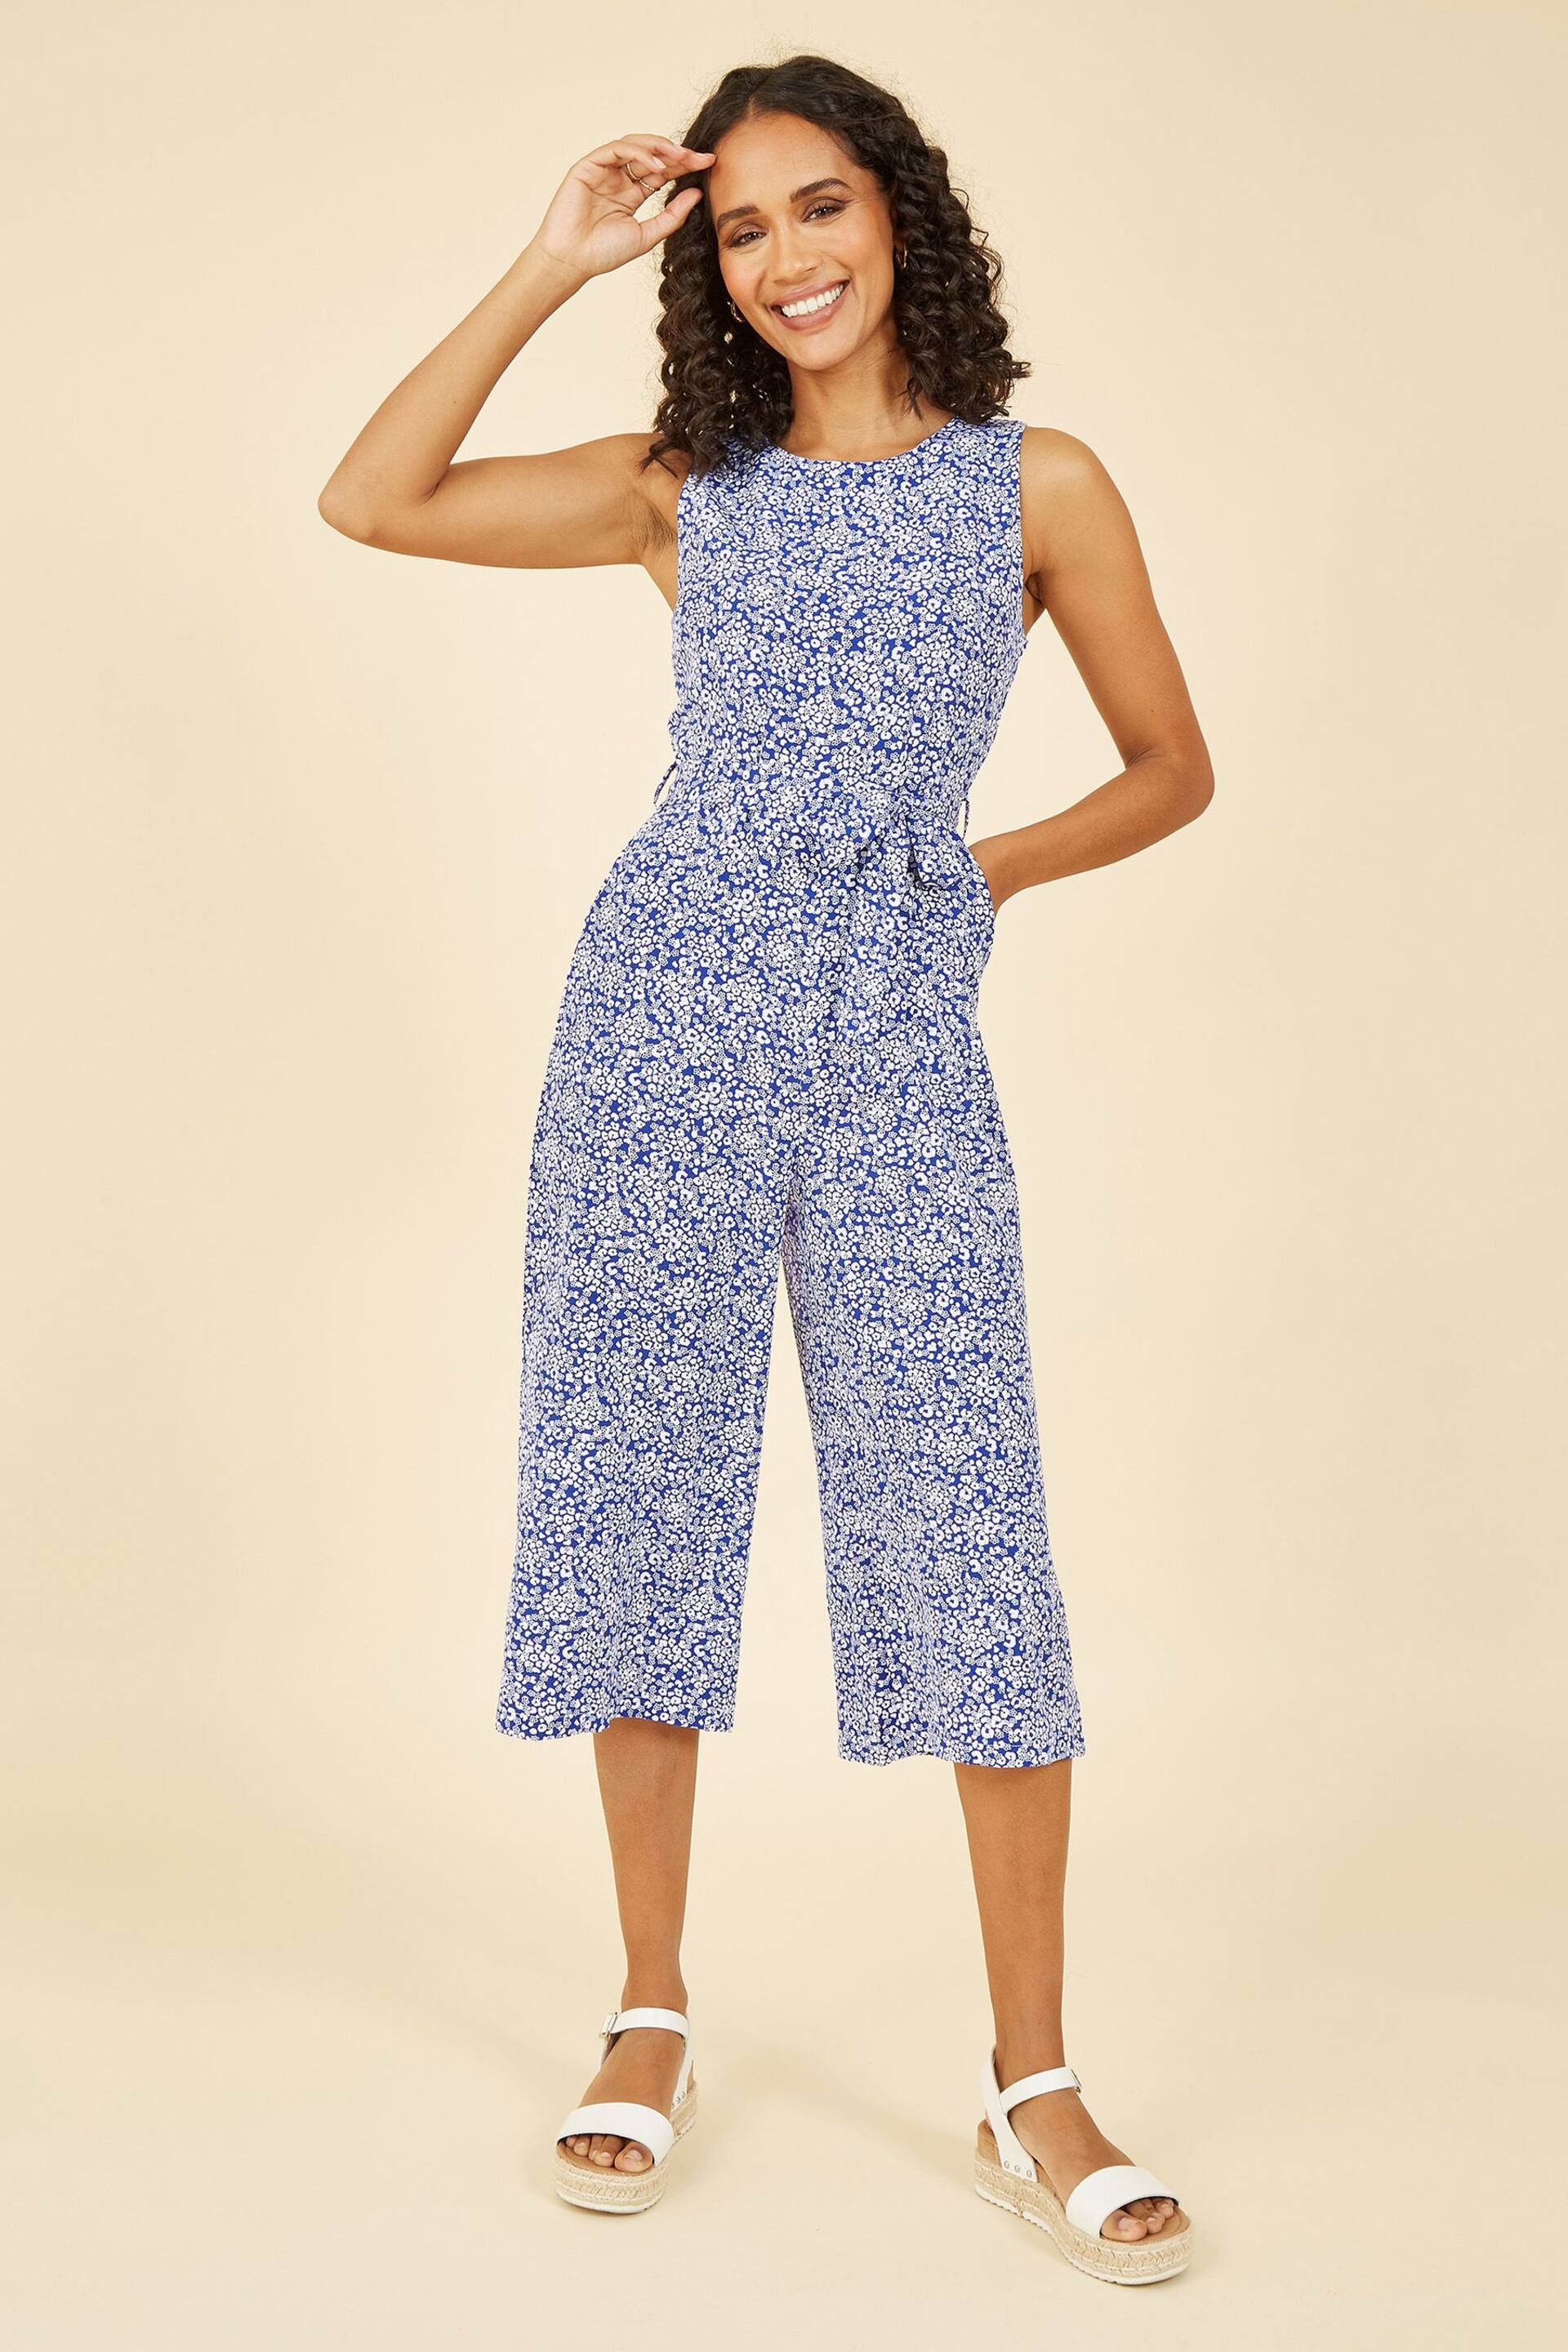 Mela Blue Ditsy Floral Print Culotte Jumpsuit - Image 1 of 4